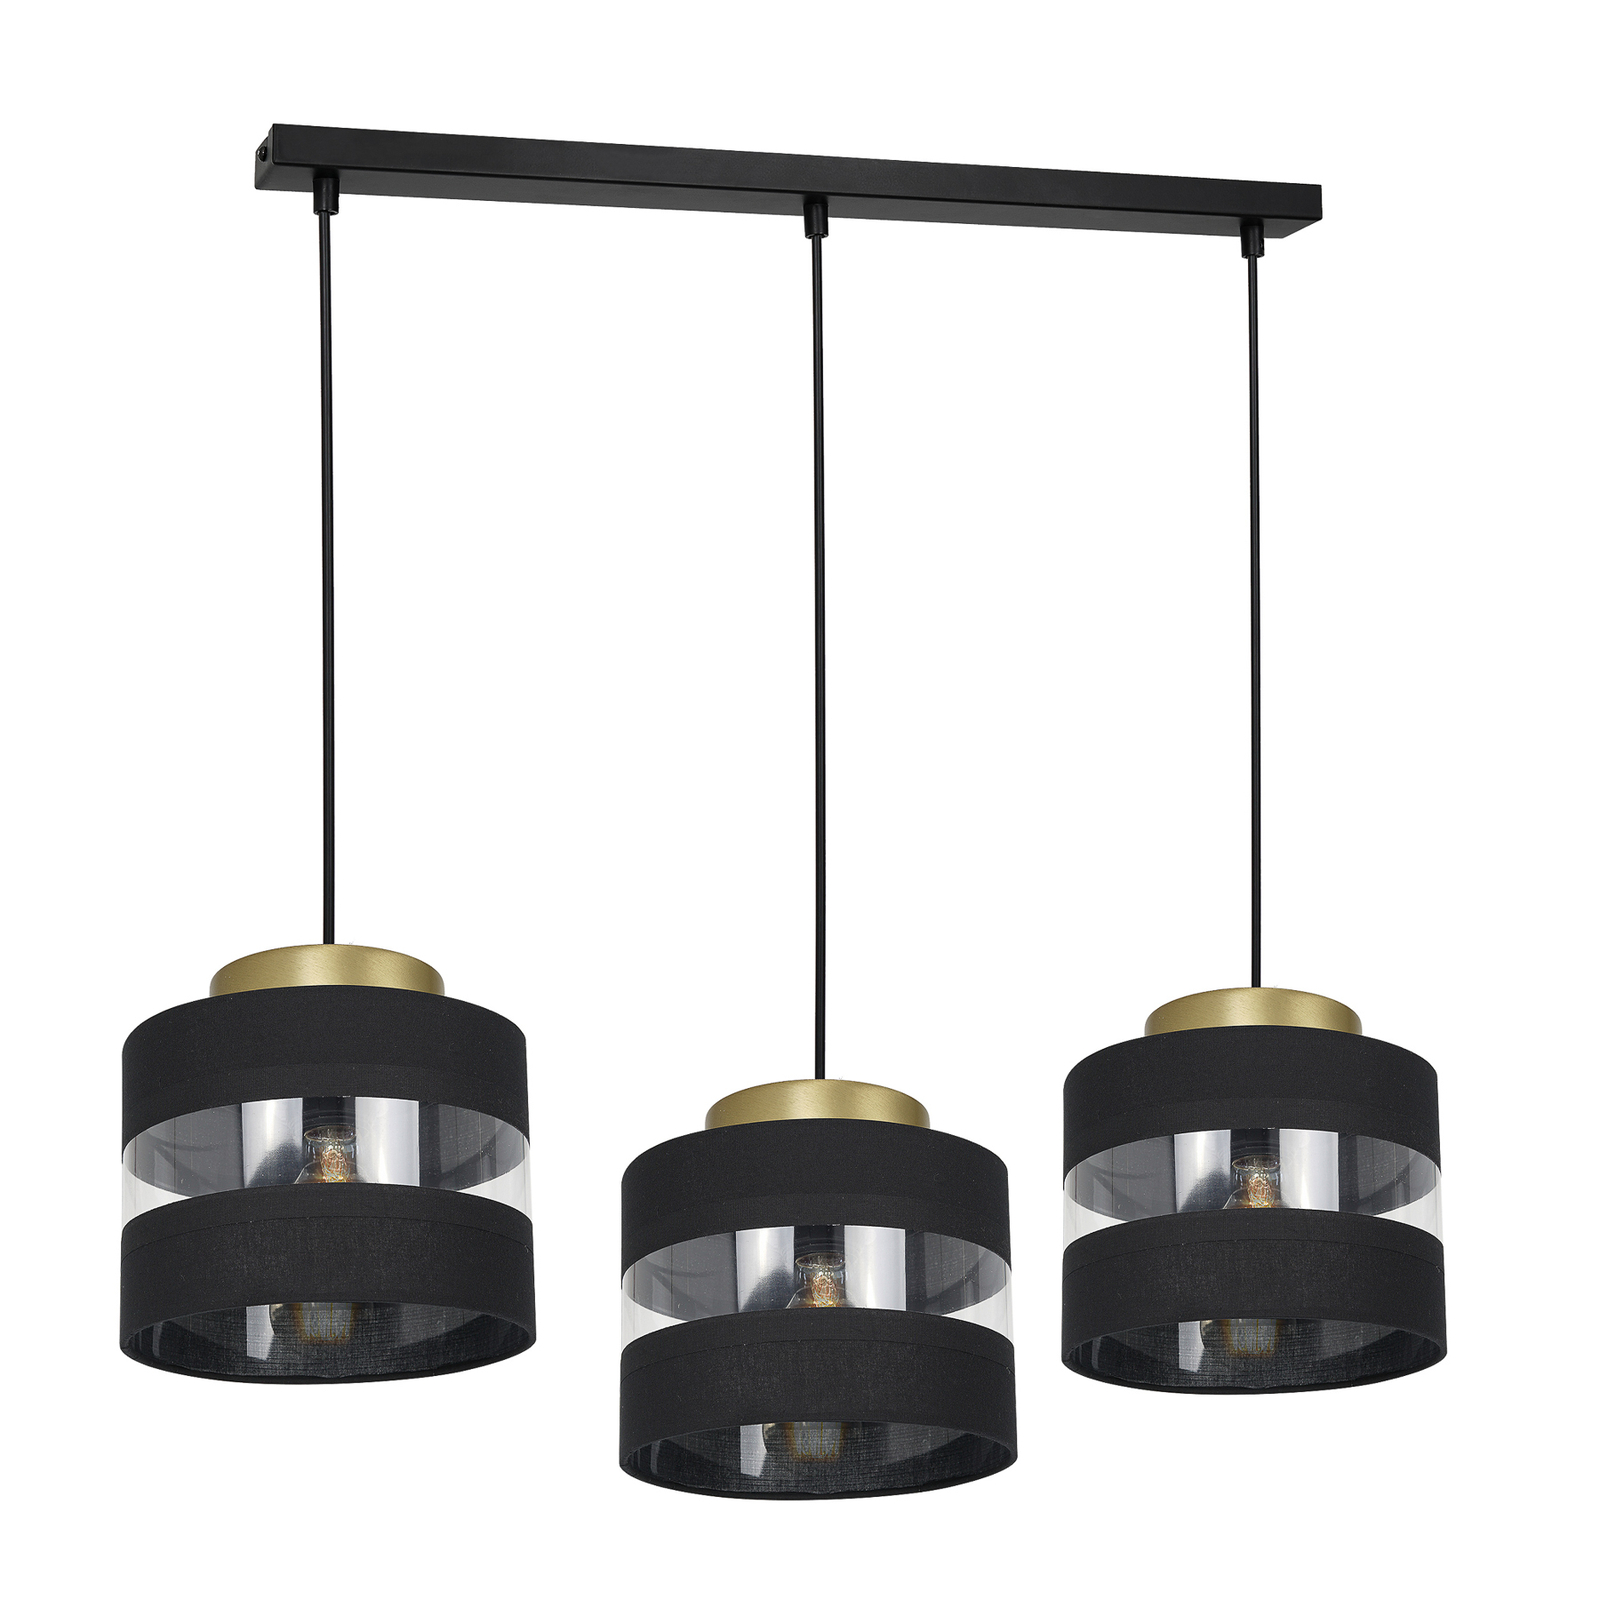 Hara hanging lamp in black/gold, three-bulb long